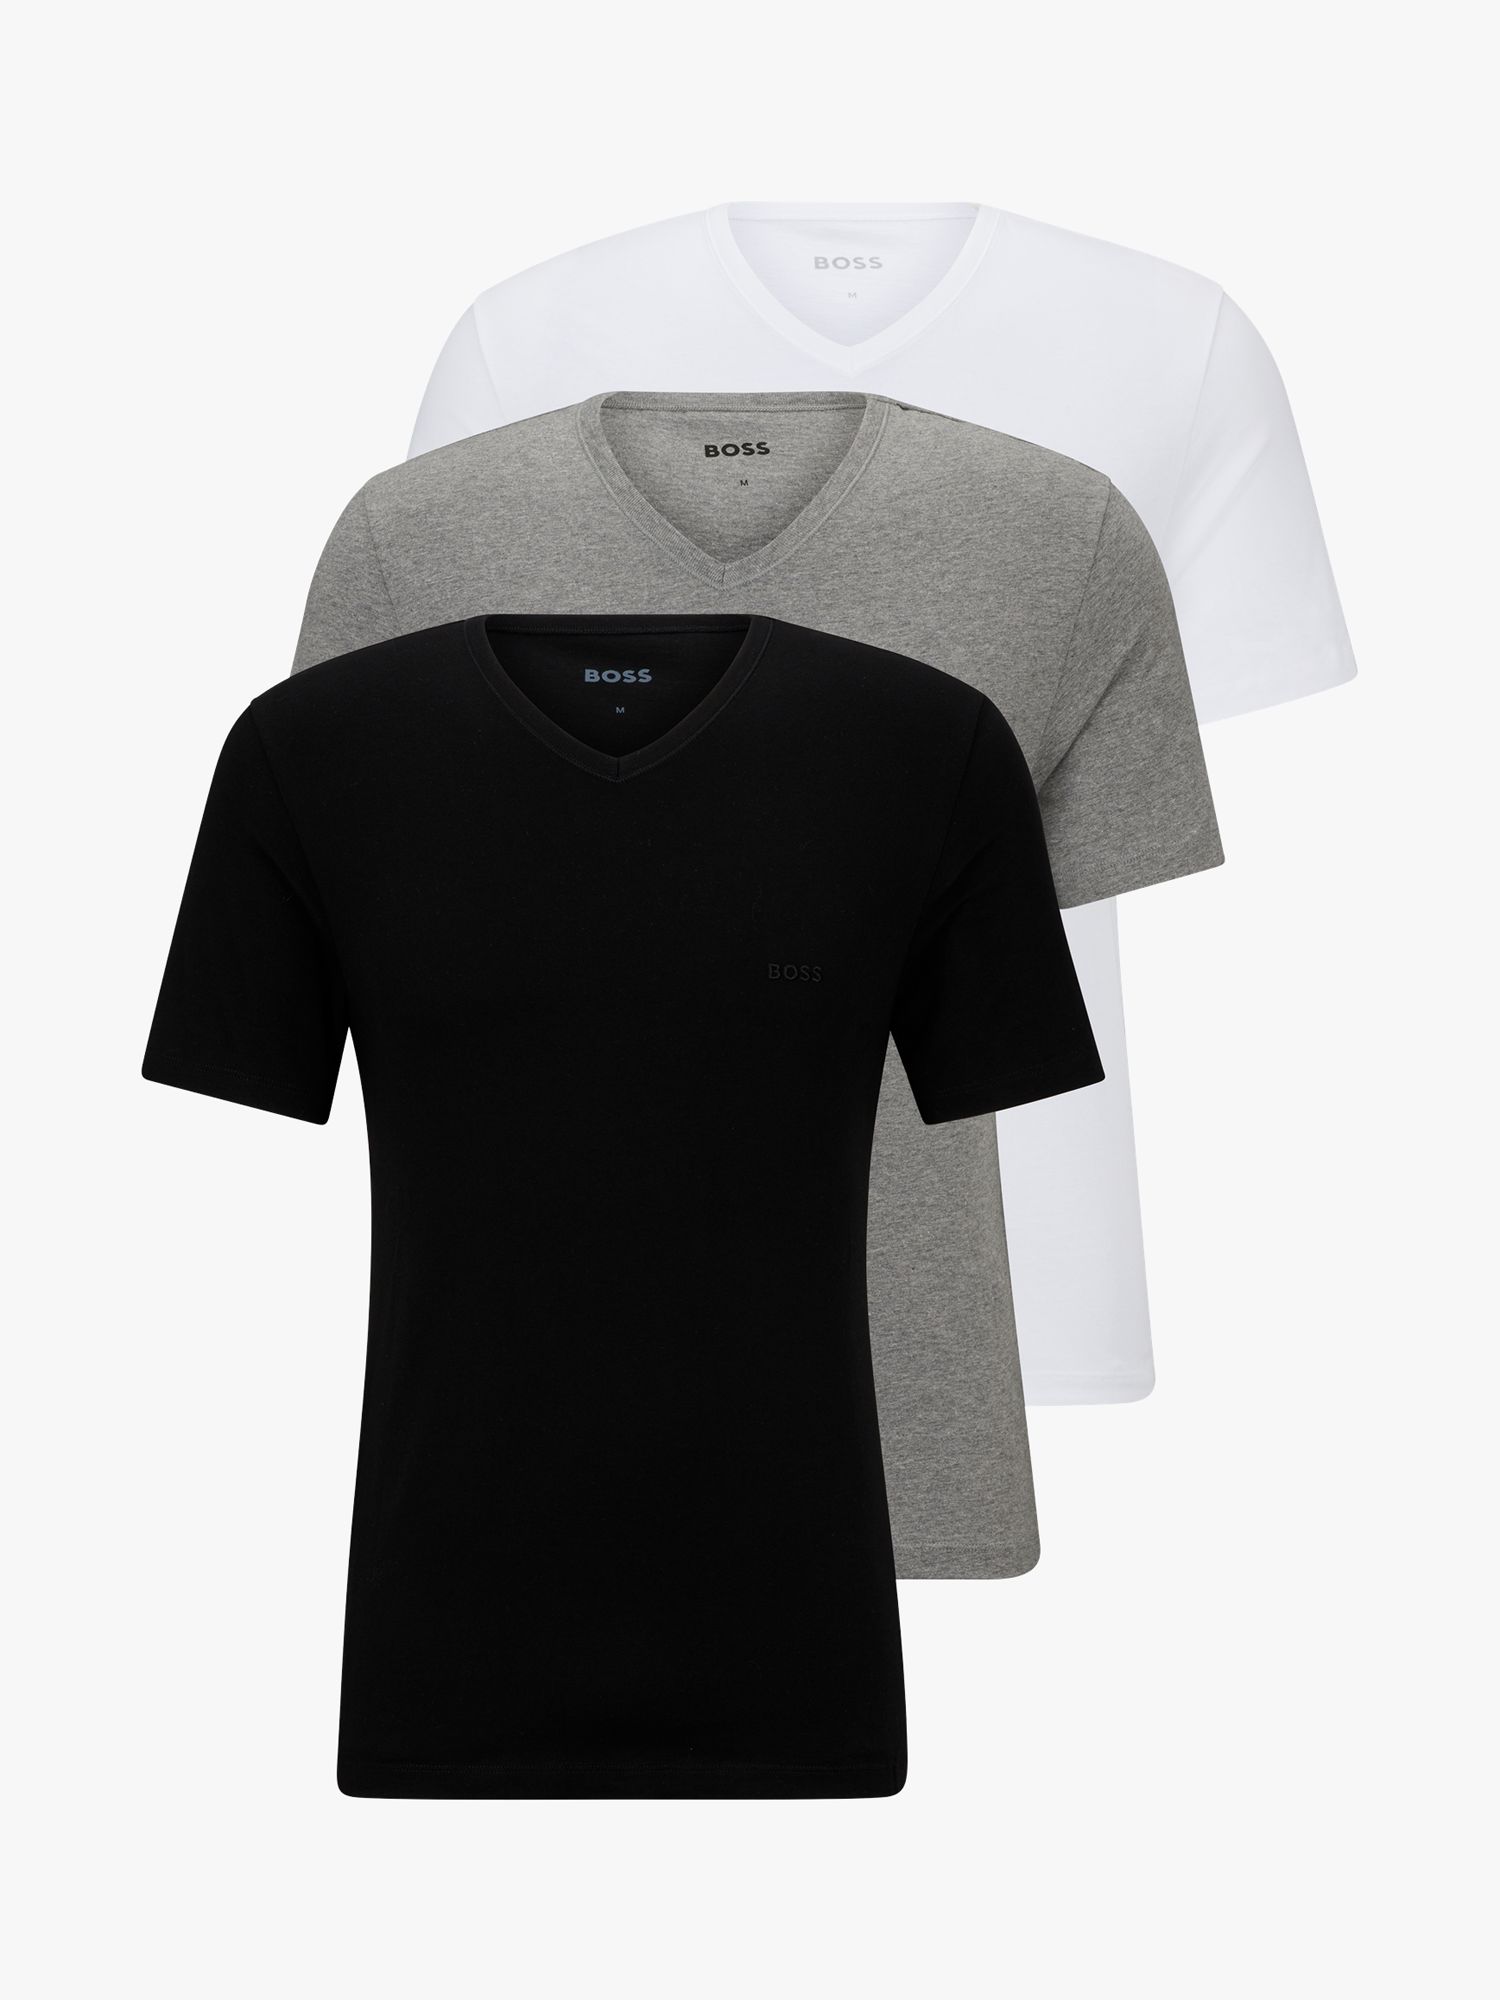 HUGO BOSS Embroidered Logo Cotton V-neck T-shirt, Pack of 3, White/Grey ...